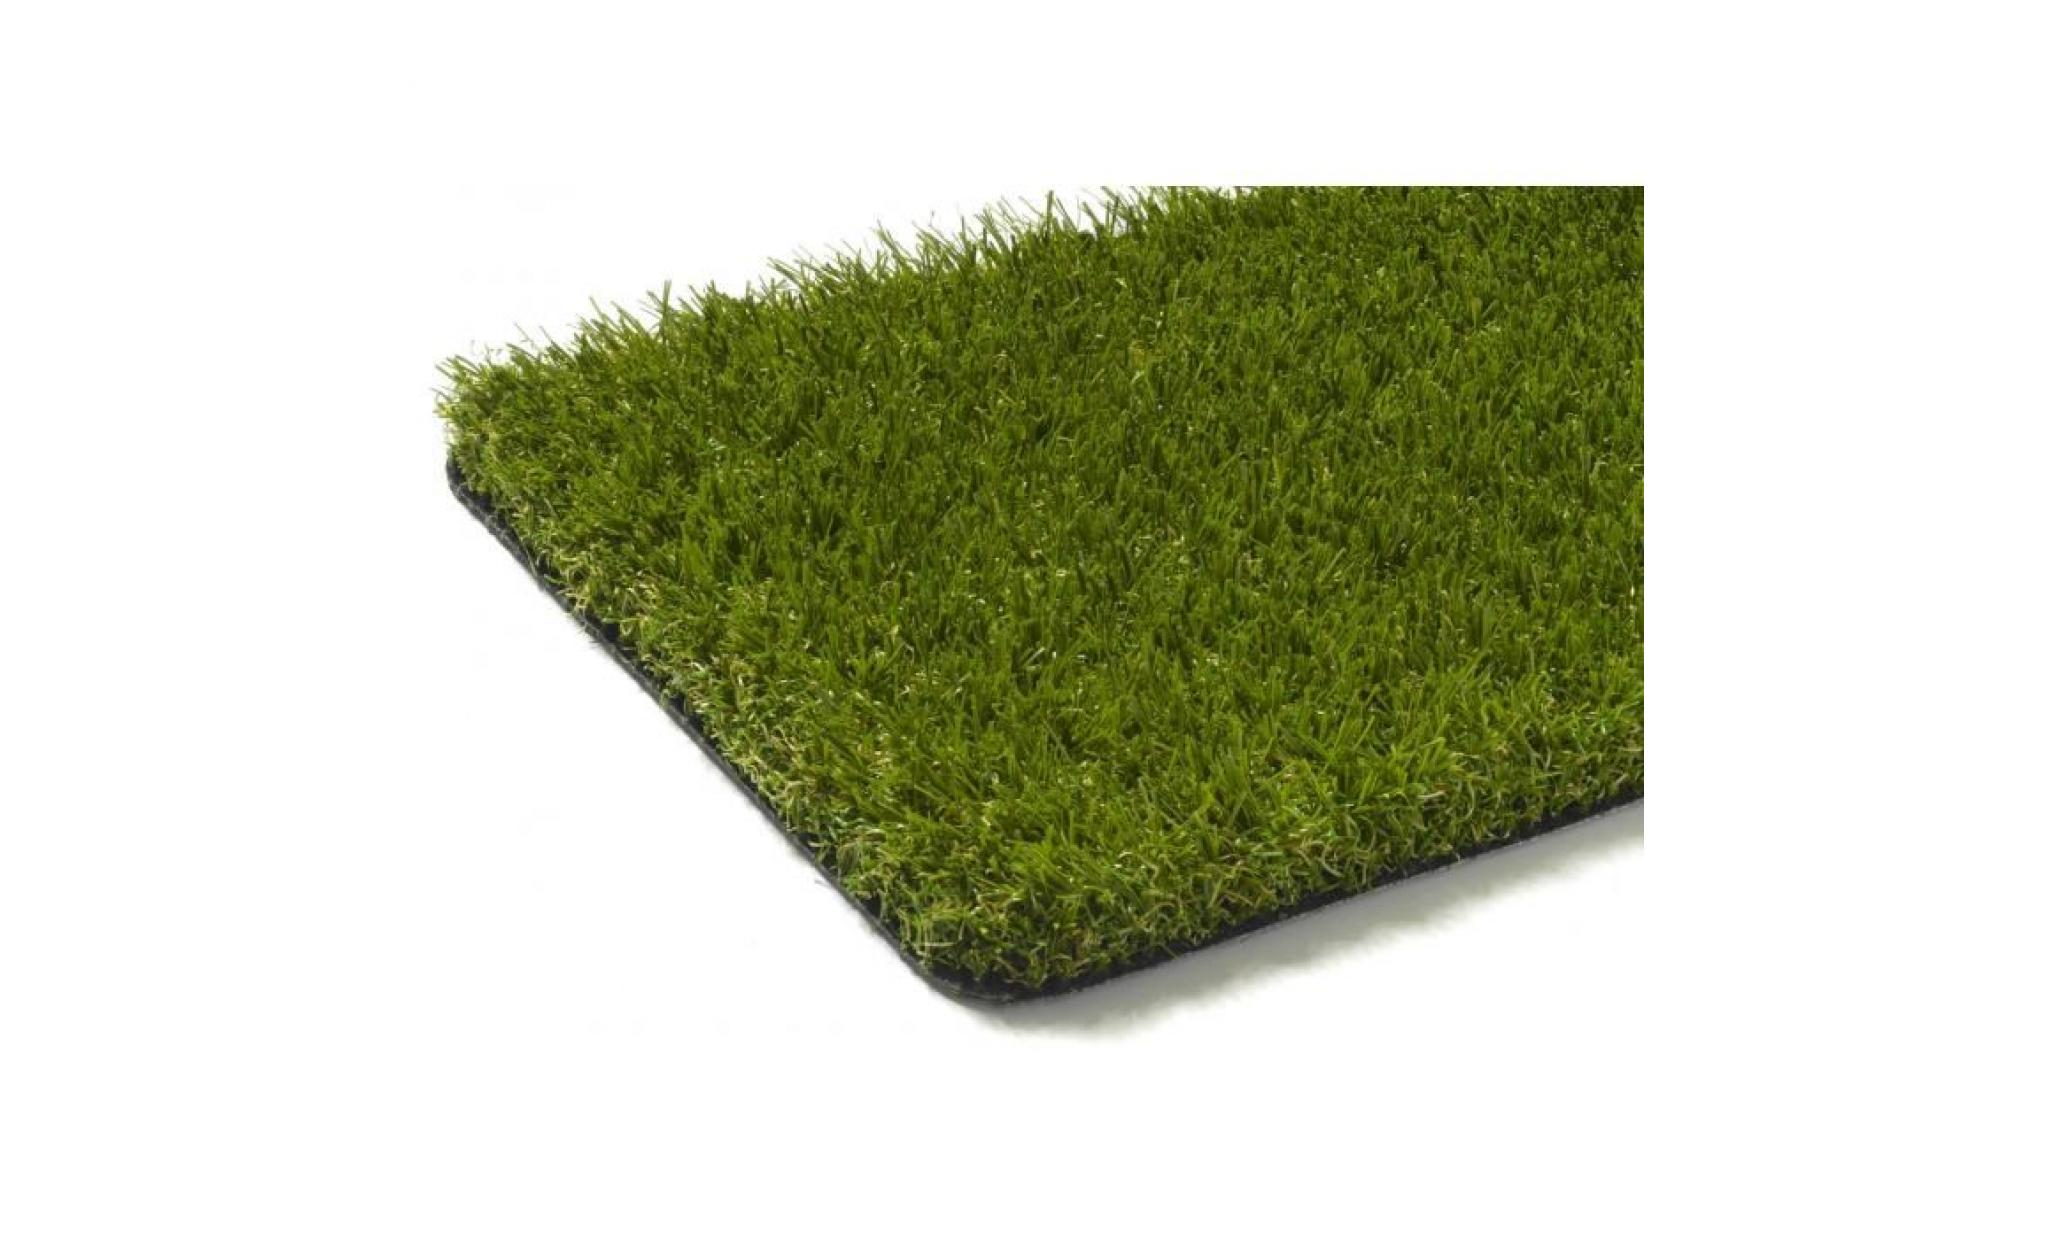 oxford   tapis type luxe gazon artificiel – pour jardin, terrasse, balcon   vert  [200x500 cm]